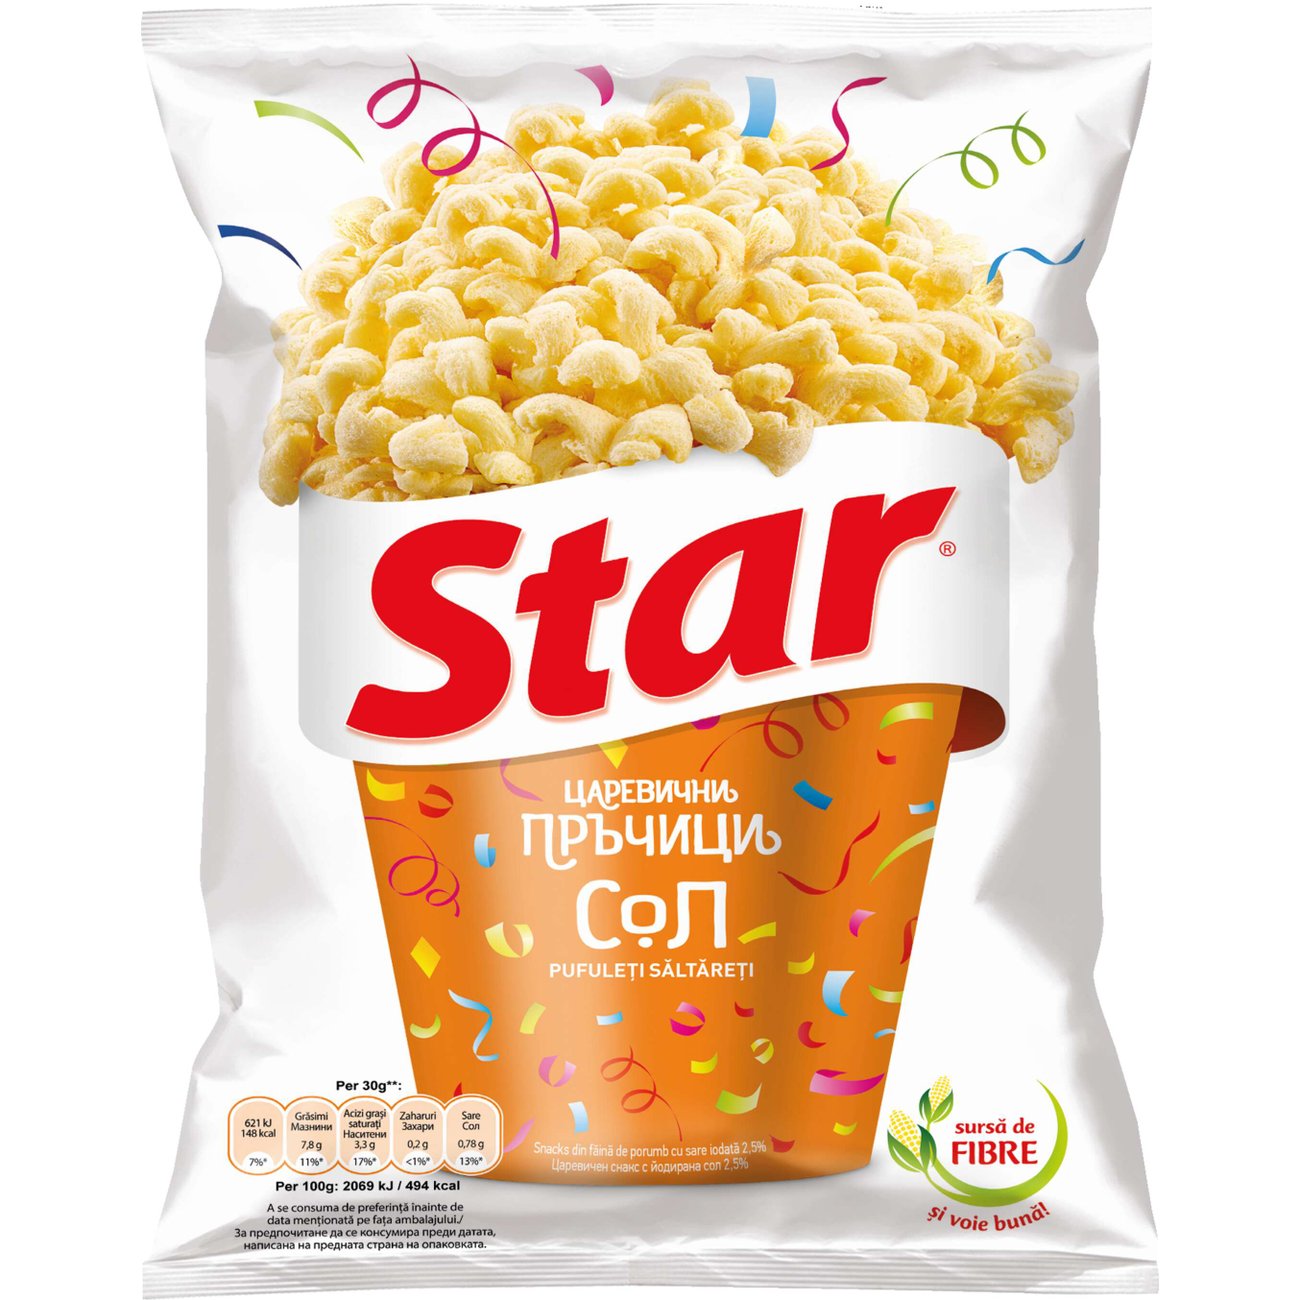 Снакс Star snacks